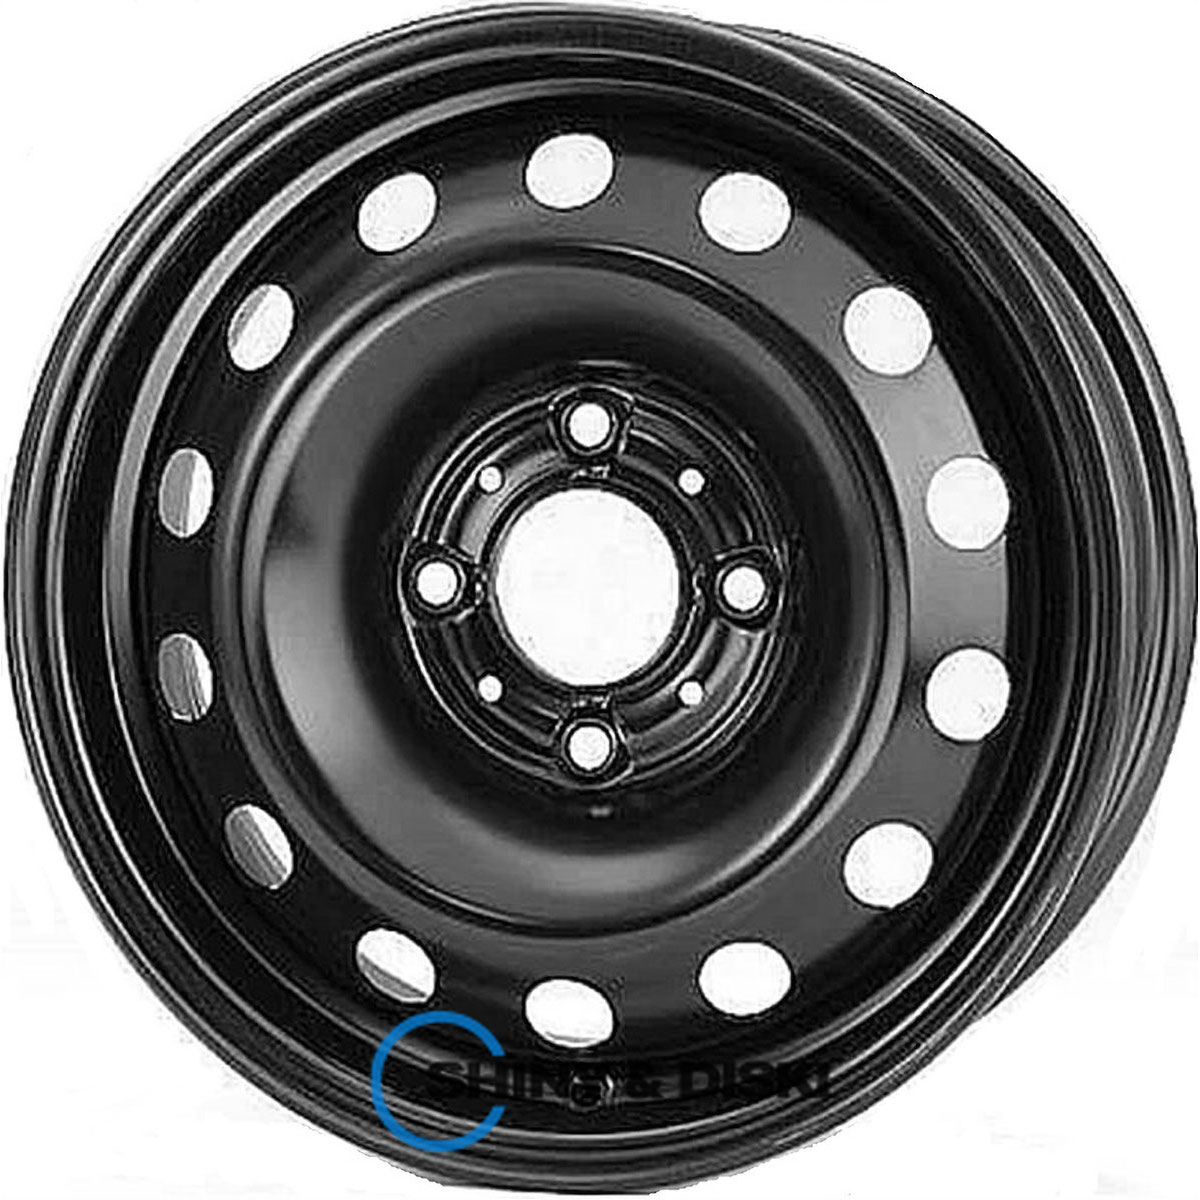 magnetto wheels 15007 b r15 w6 pcd5x100 eт38 dia57.1